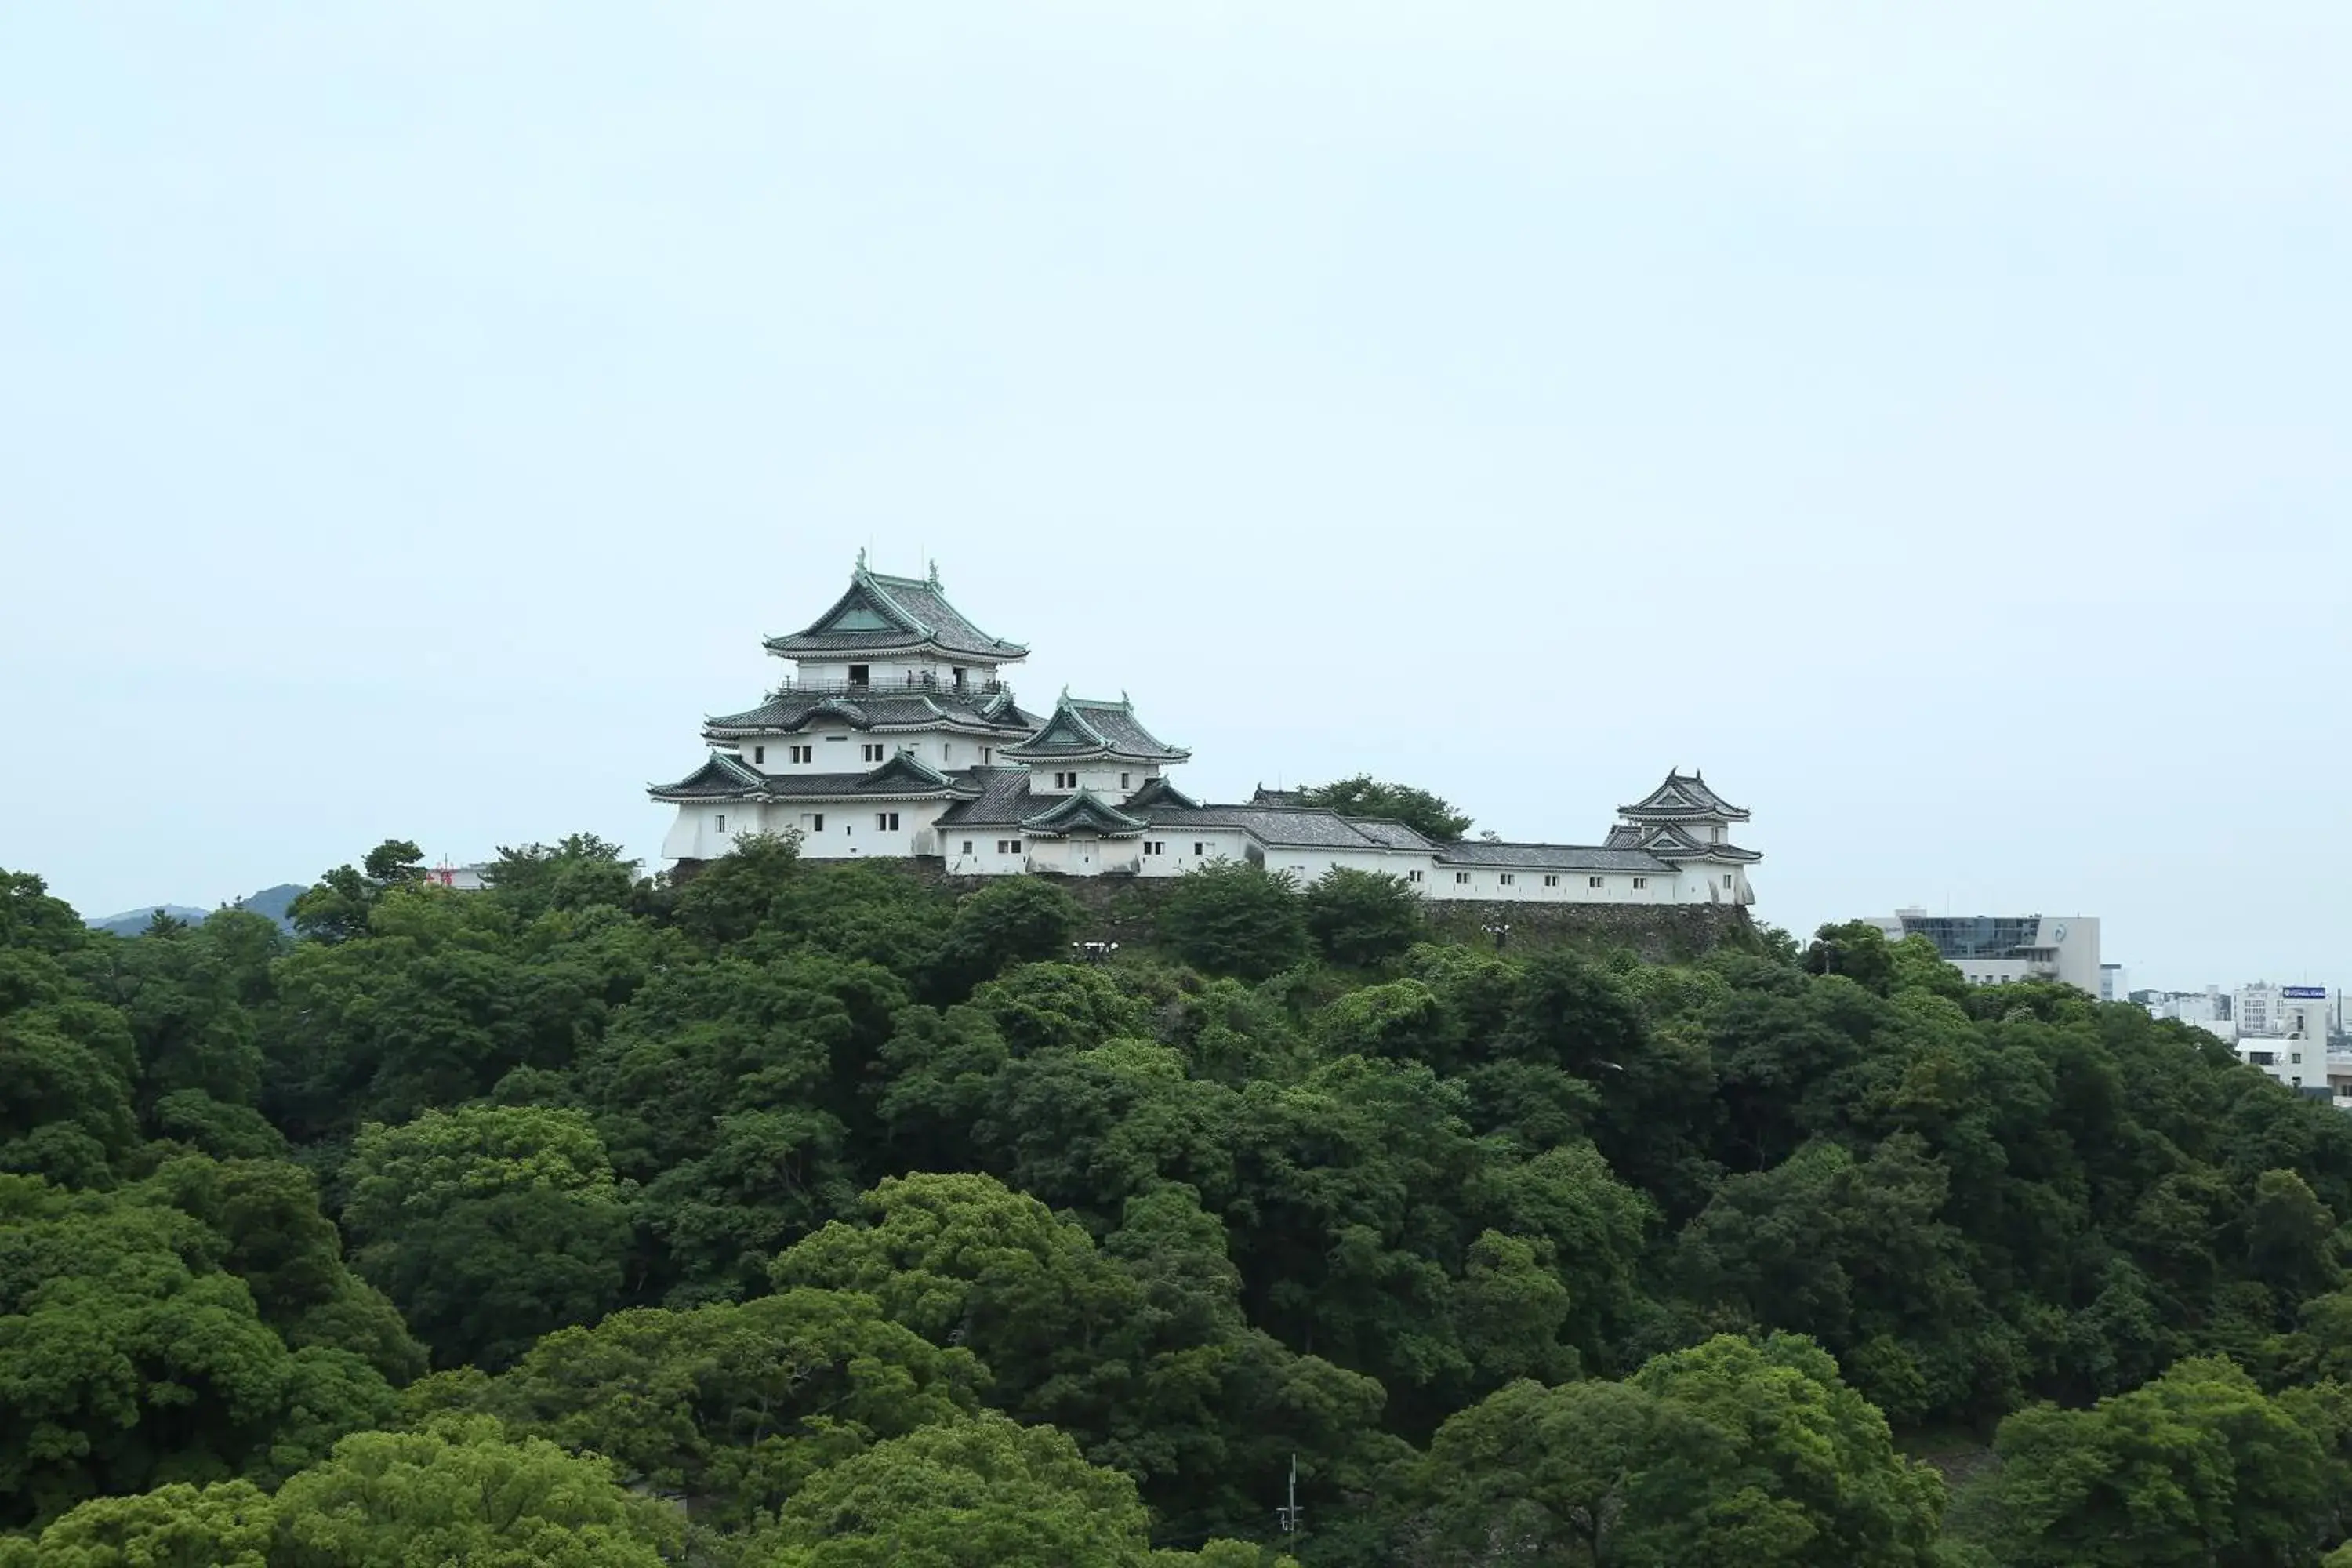 Daiwa Roynet Hotel Wakayama Castle